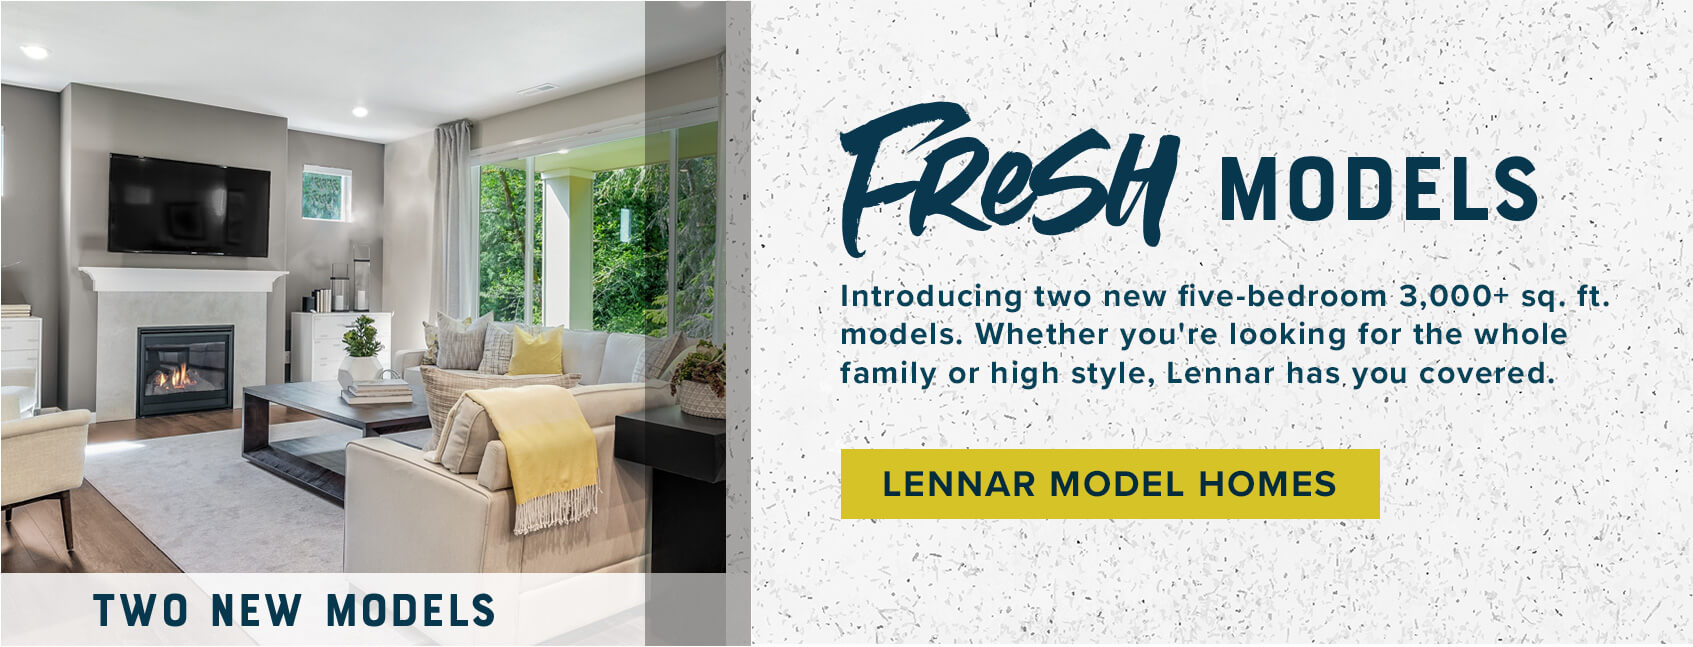 Fresh Models - Lennar Model Homes